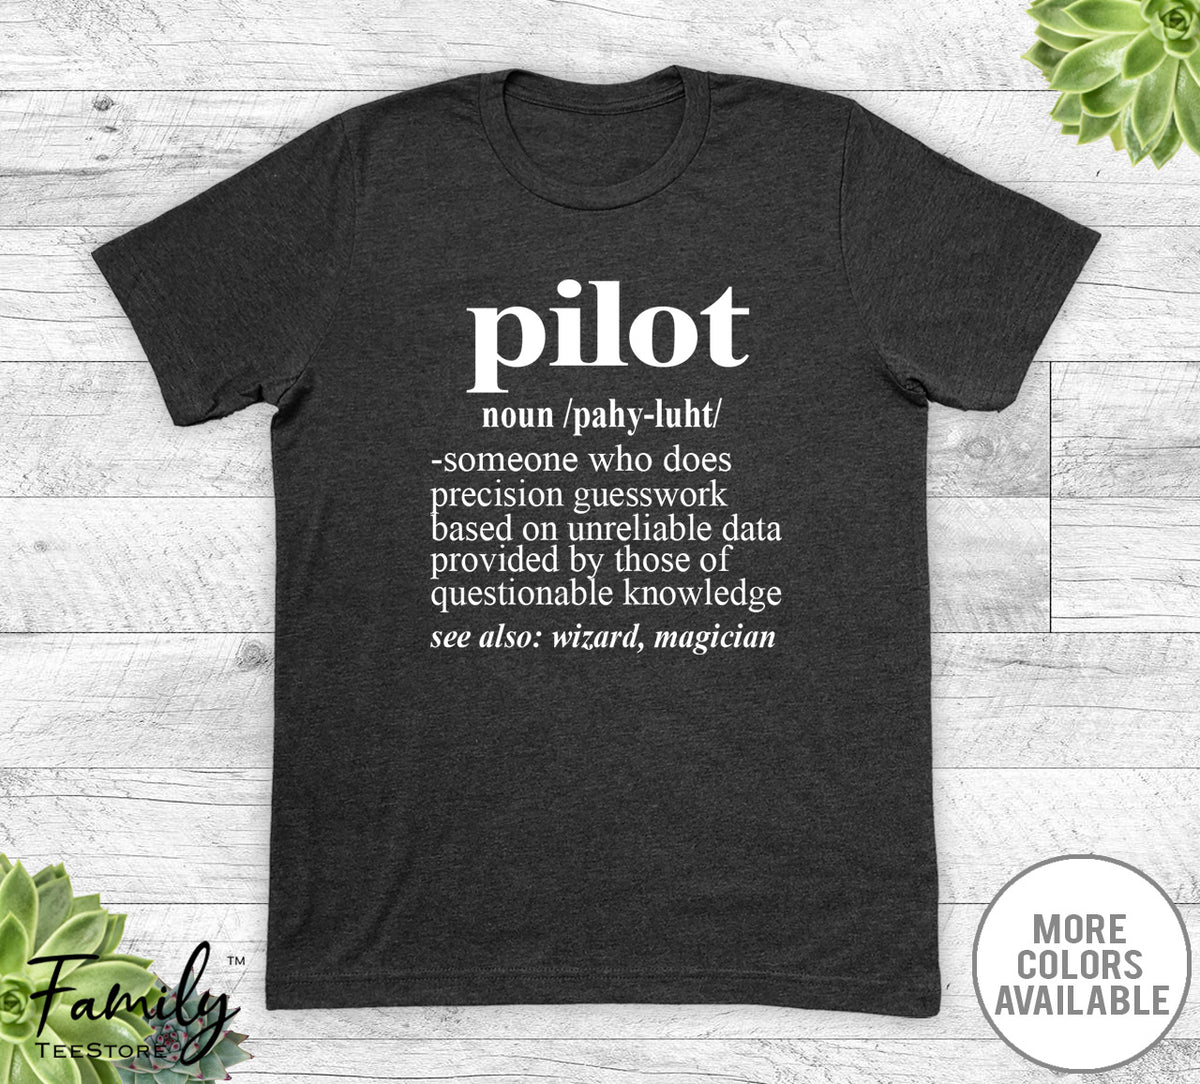 Pilot Noun - Unisex T-shirt - Pilot Shirt - Pilot Gift - familyteeprints